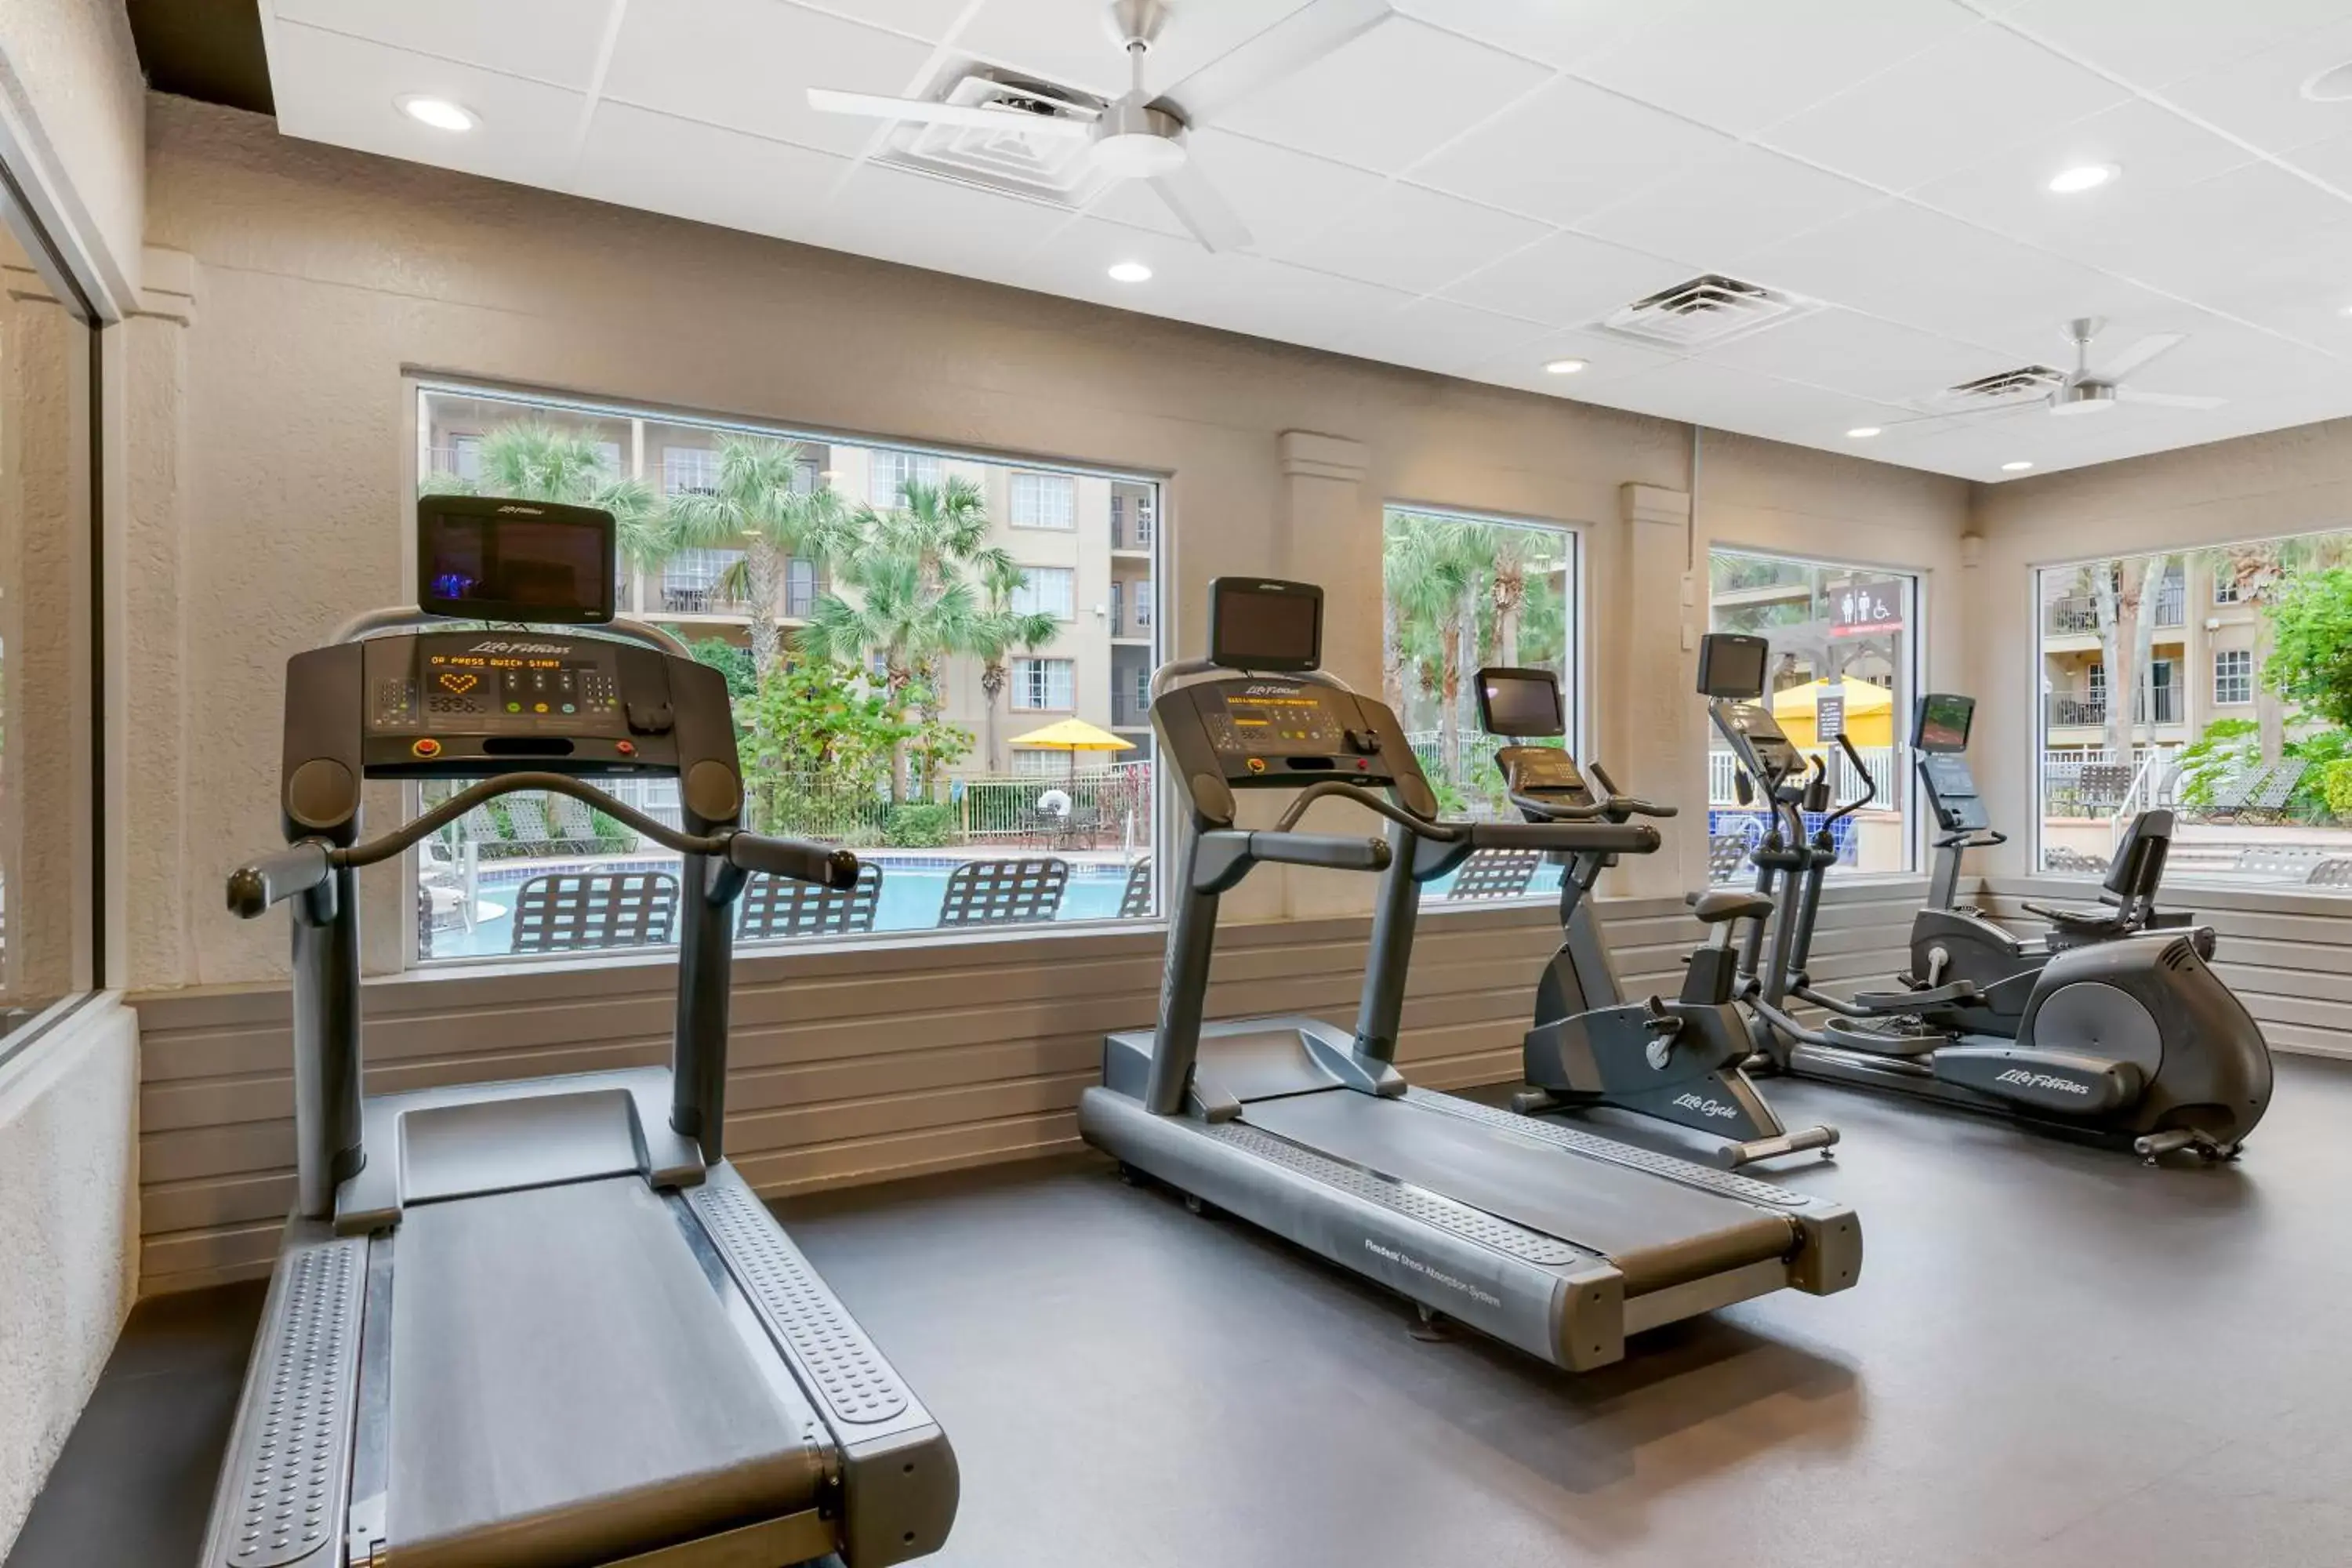 Fitness centre/facilities, Fitness Center/Facilities in Liki Tiki Village